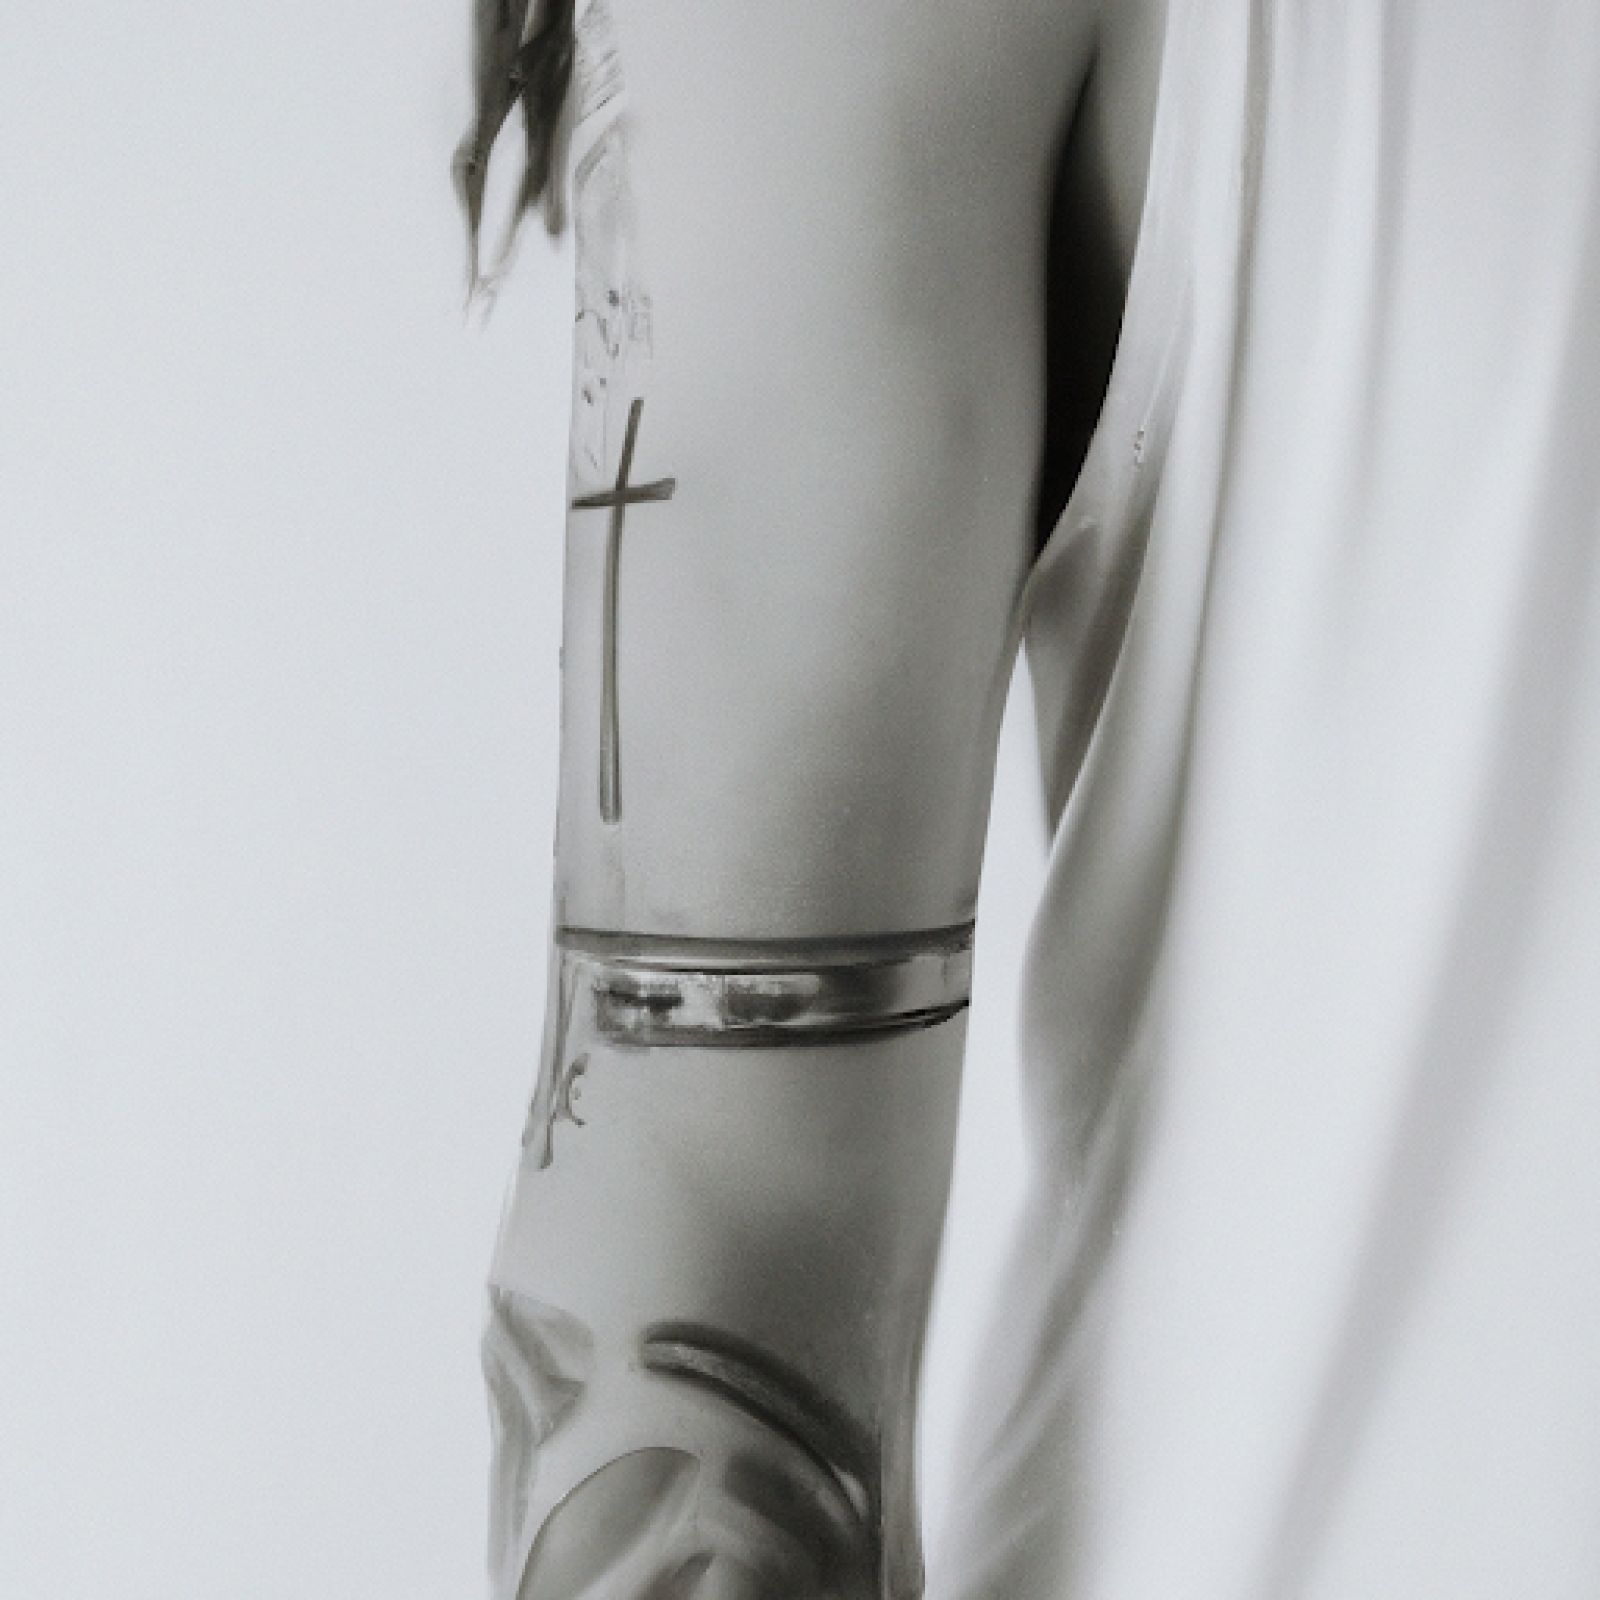 Jesus tattoo on arm for women